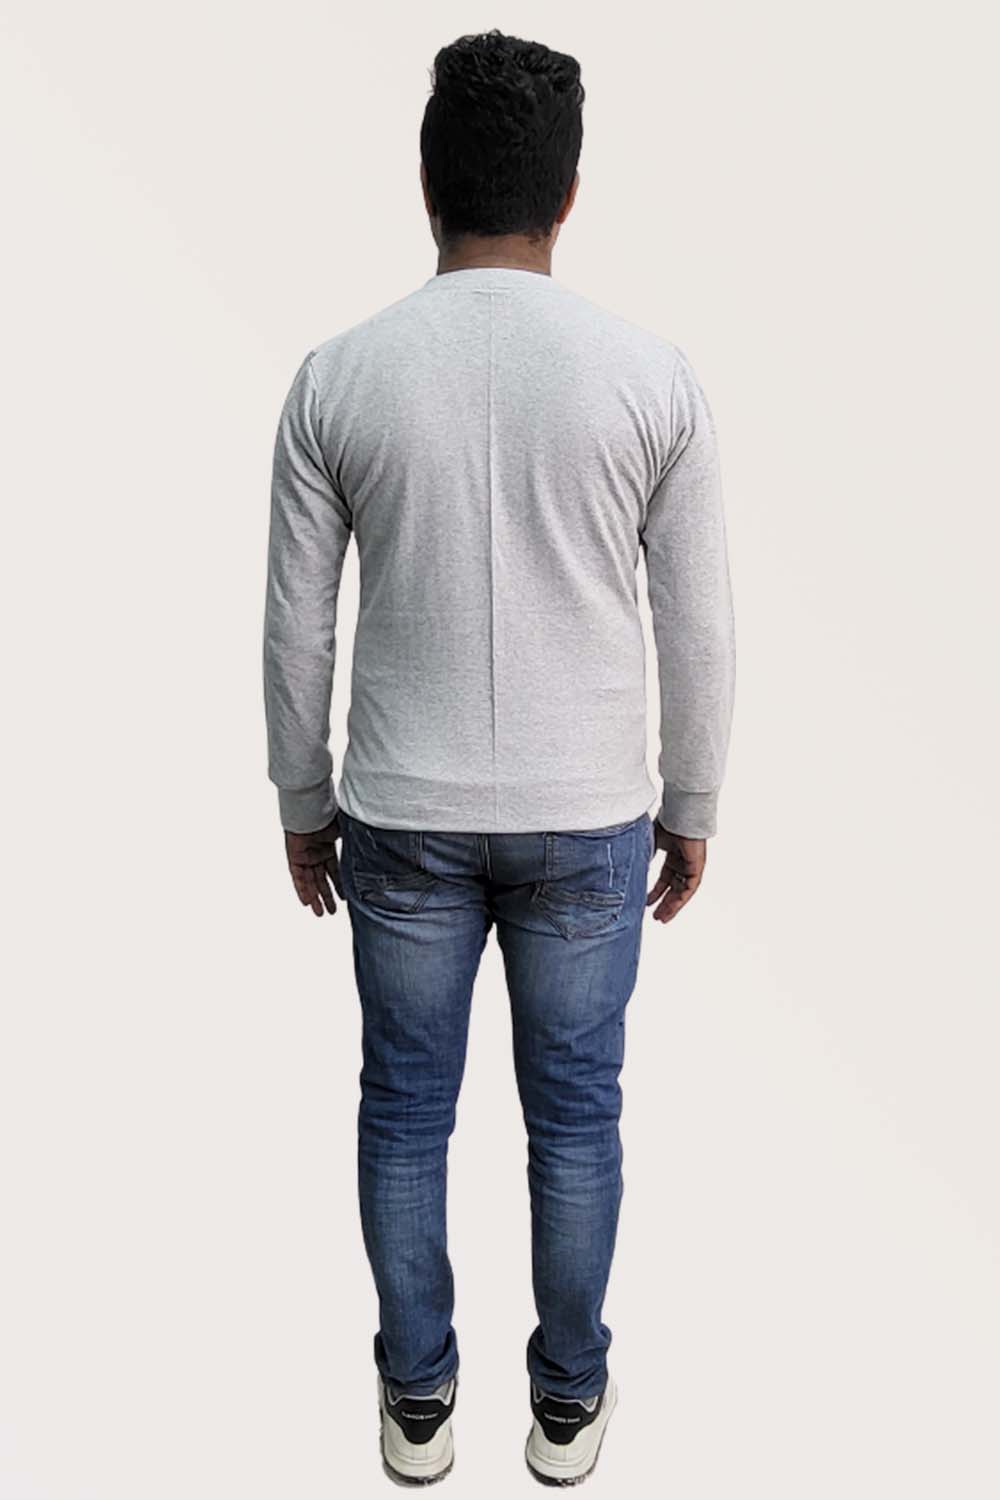 Basic Handsome Grey Full Sleeve Sweatshirt